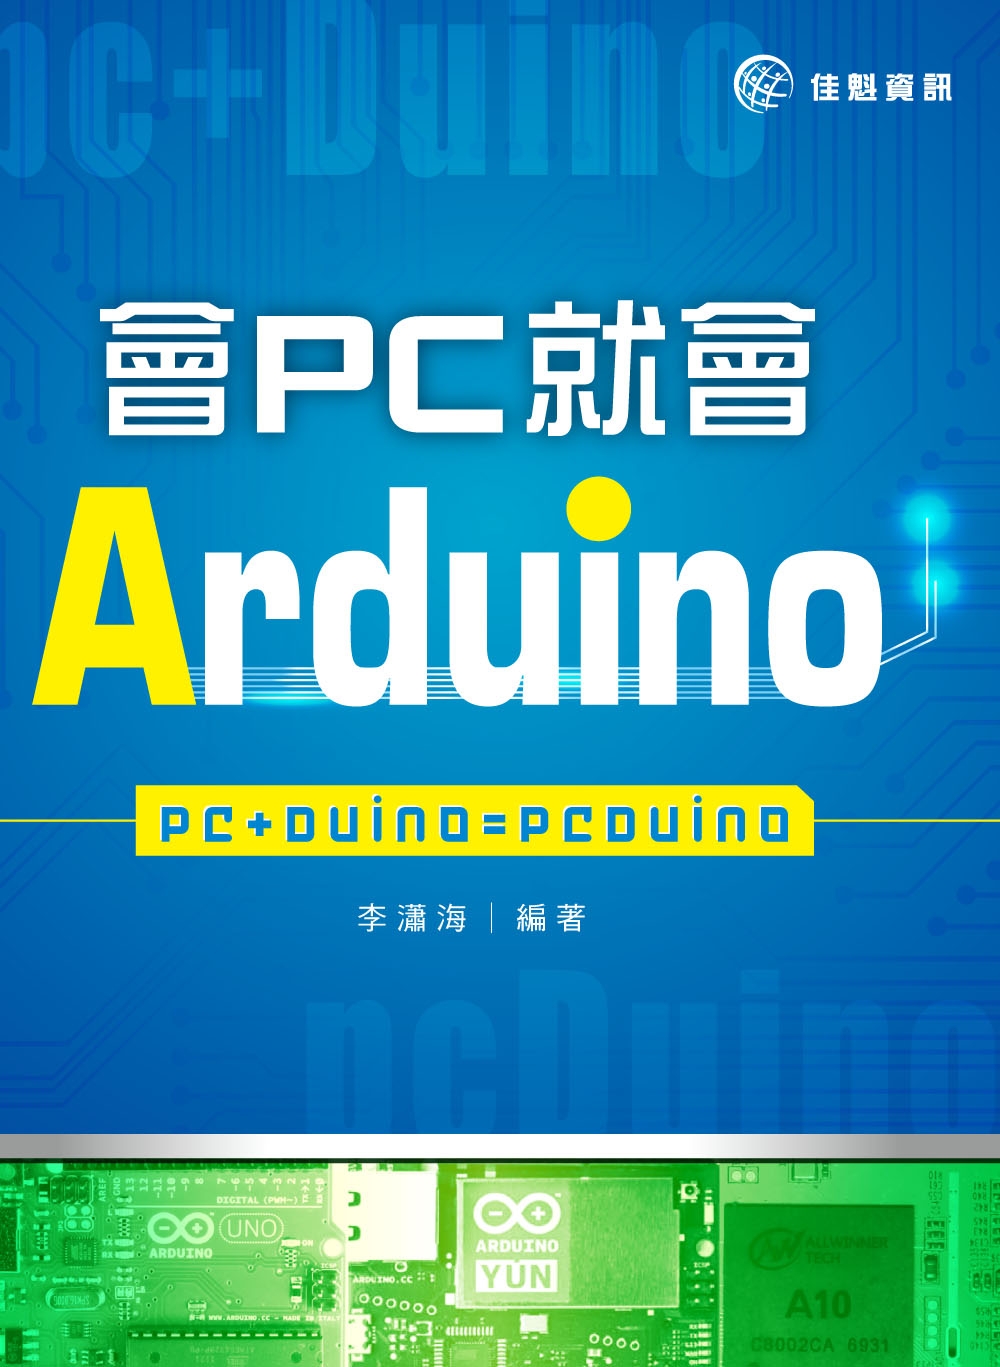 會PC就會Arduino：PC+Duino=pcDuino